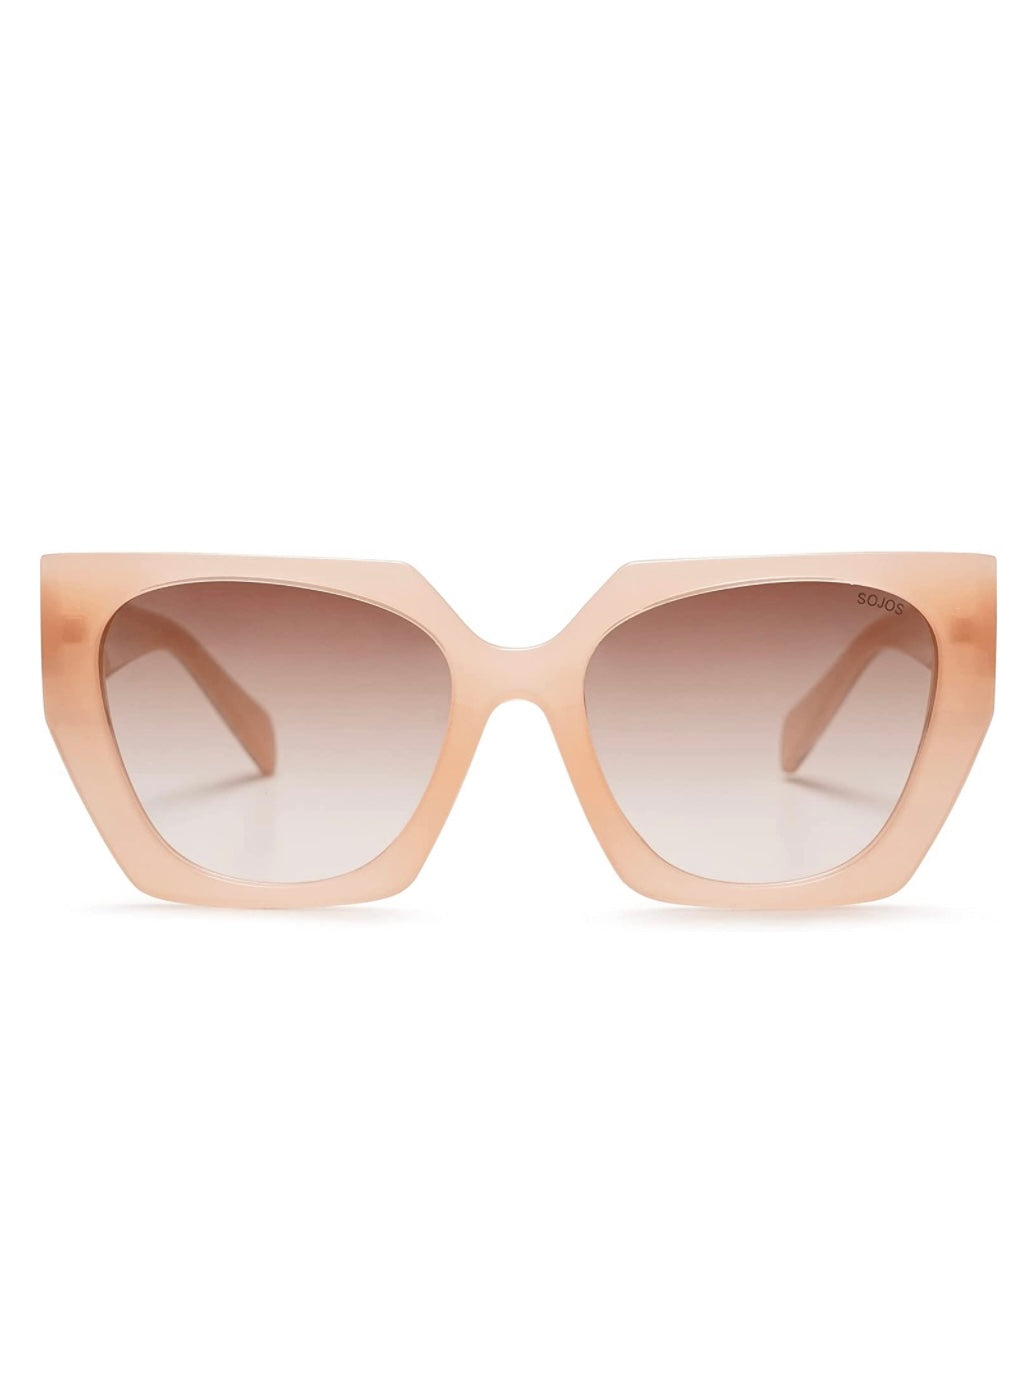 Pink big square sunglasses